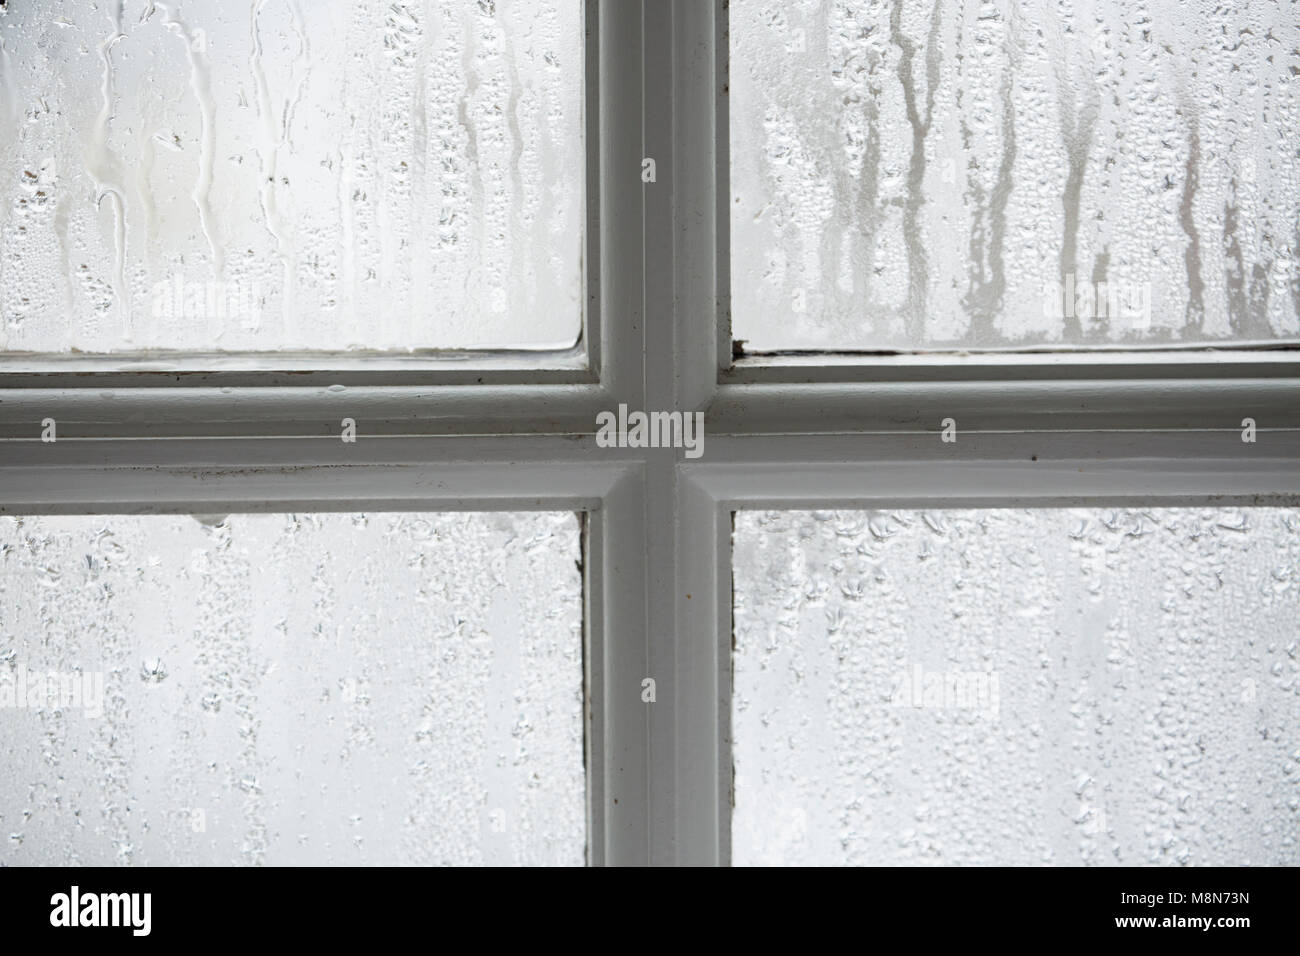 Condensation on single pane wooden sash windows during cold weather, Dorset UK Stock Photo